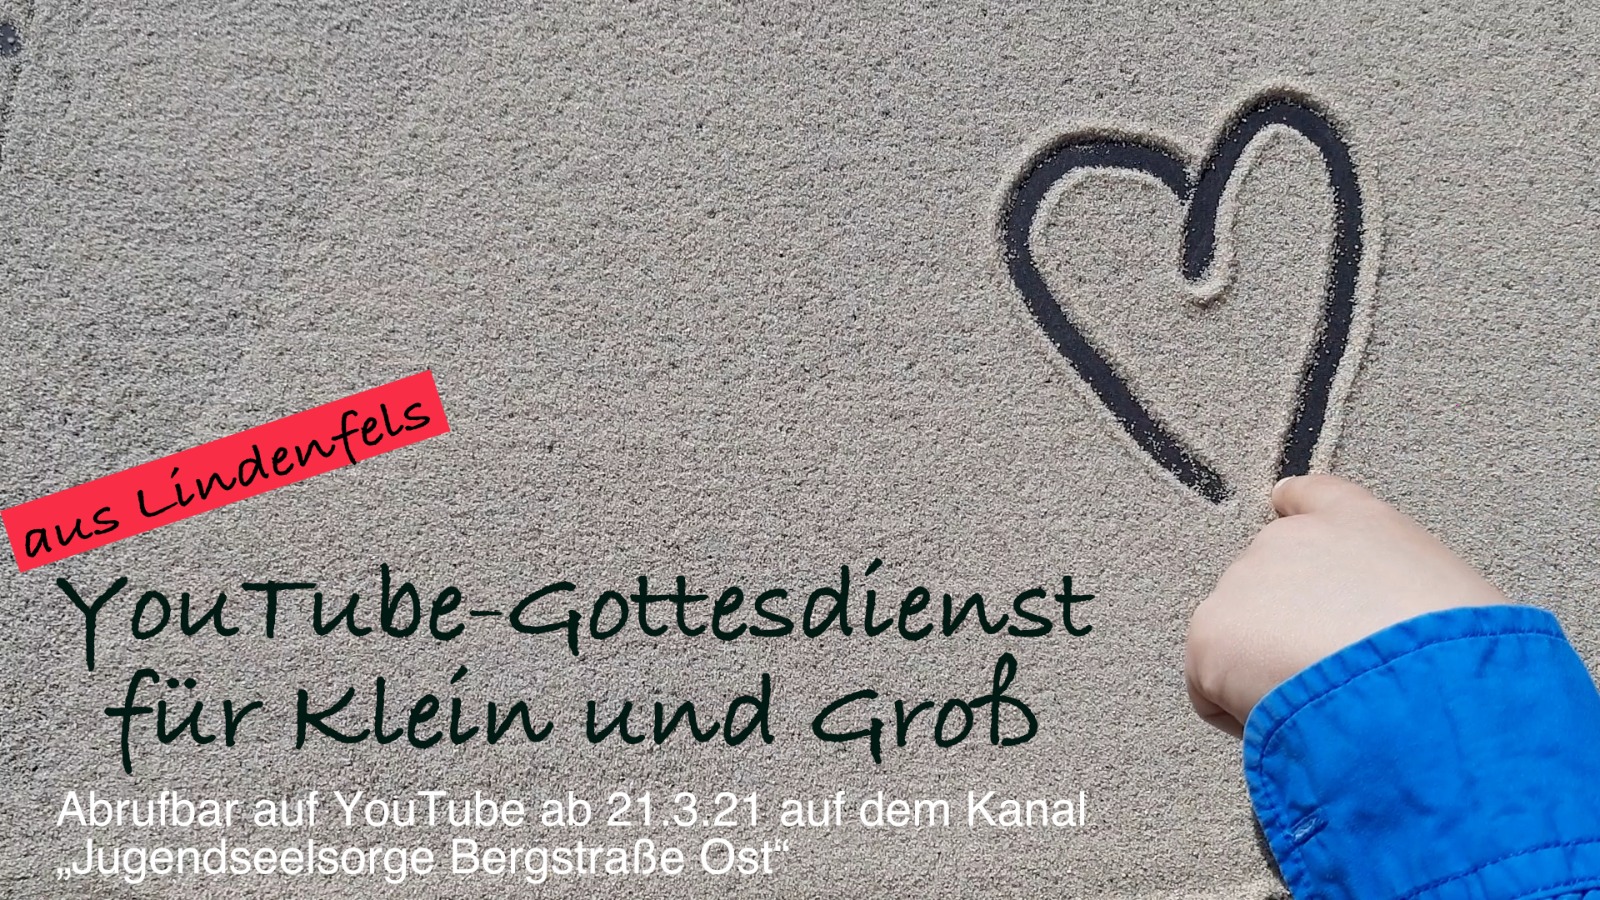 Flyer für YouTube-Familiengottesdienst in Lindenfels (c) Pfarrgruppe Fürth-Lindenfels